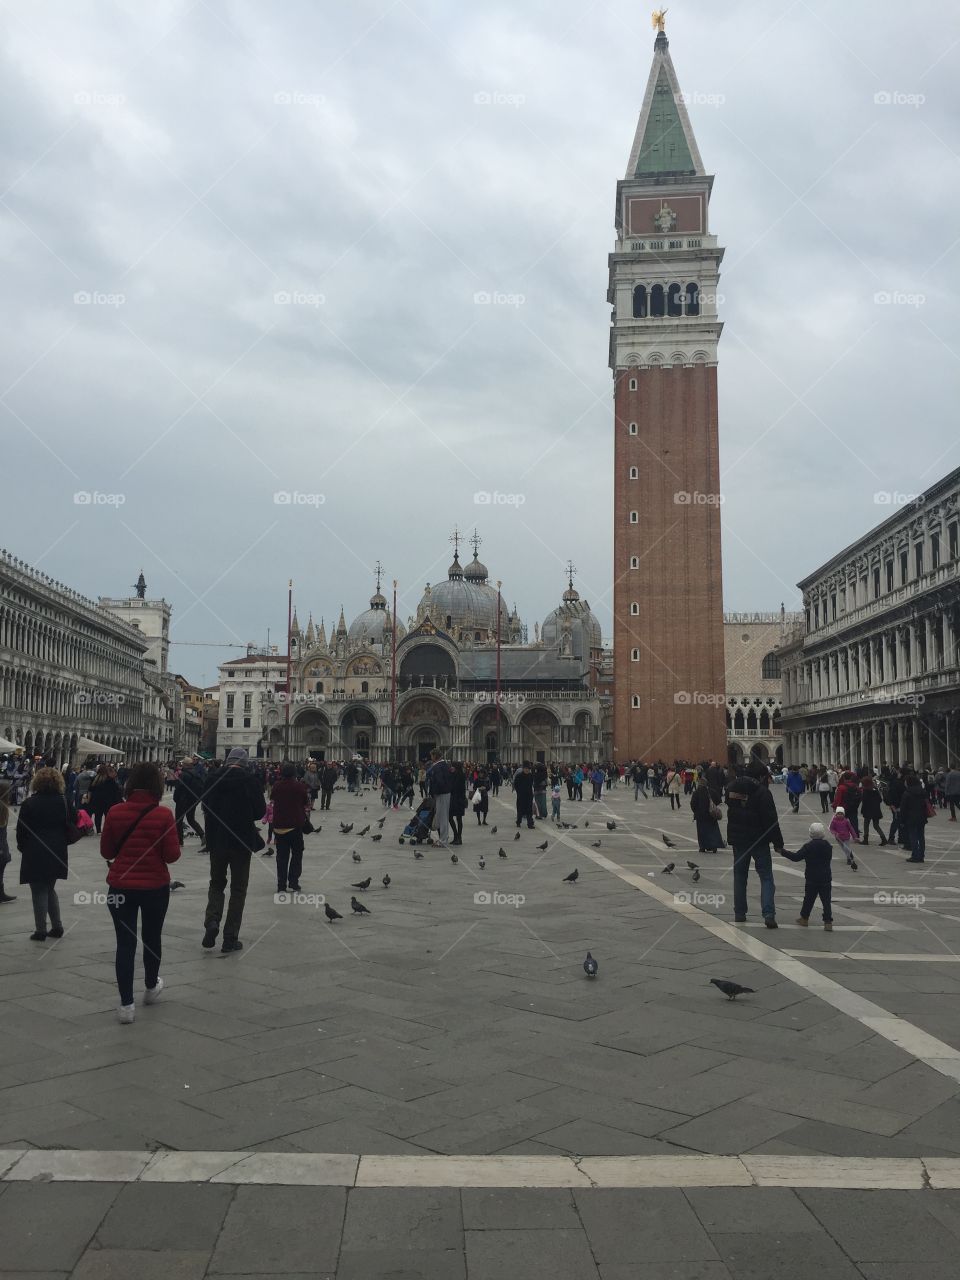 We have birds. Piazza San Marco. Venice, Italy